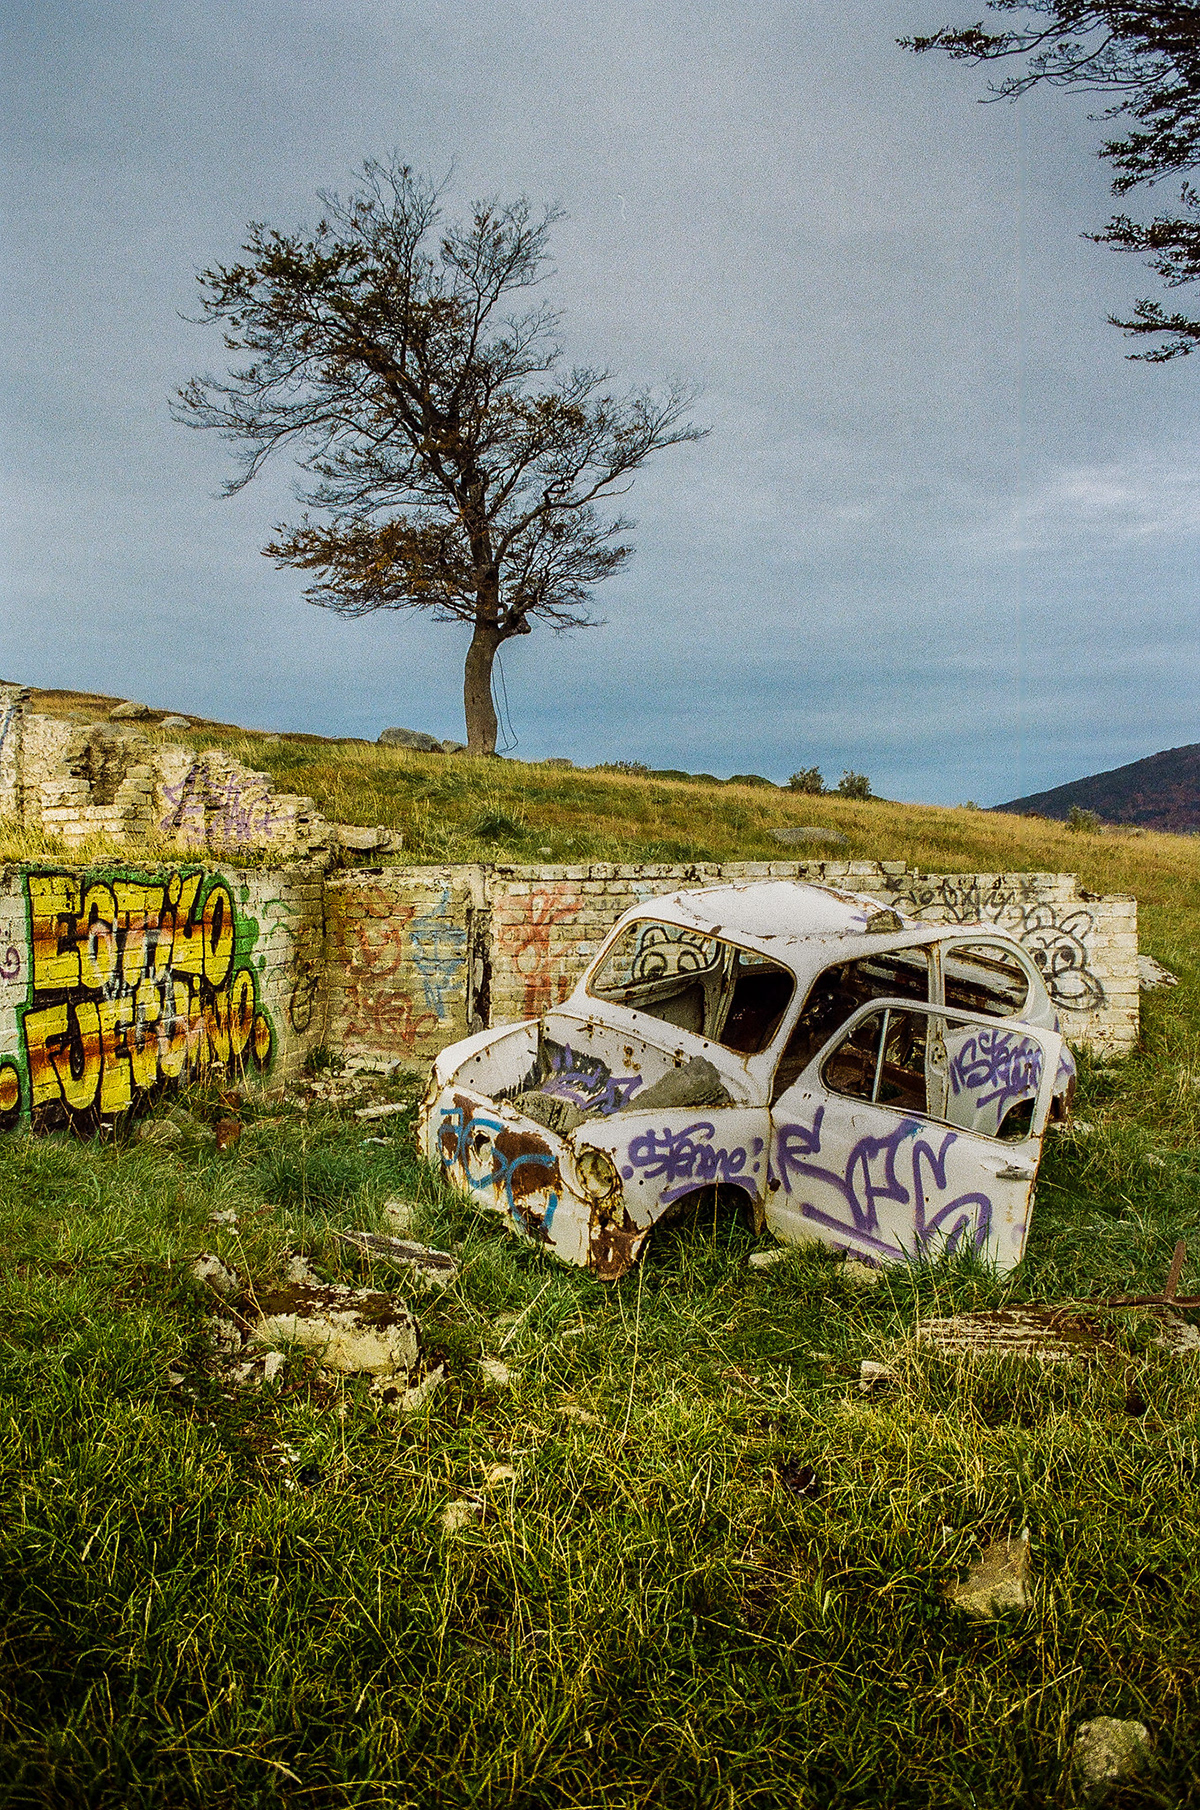 analogic photography autos abandonados Cars Chatarra dropouts ecologia film photography formato medio naturaleza Yashica MAT 124G